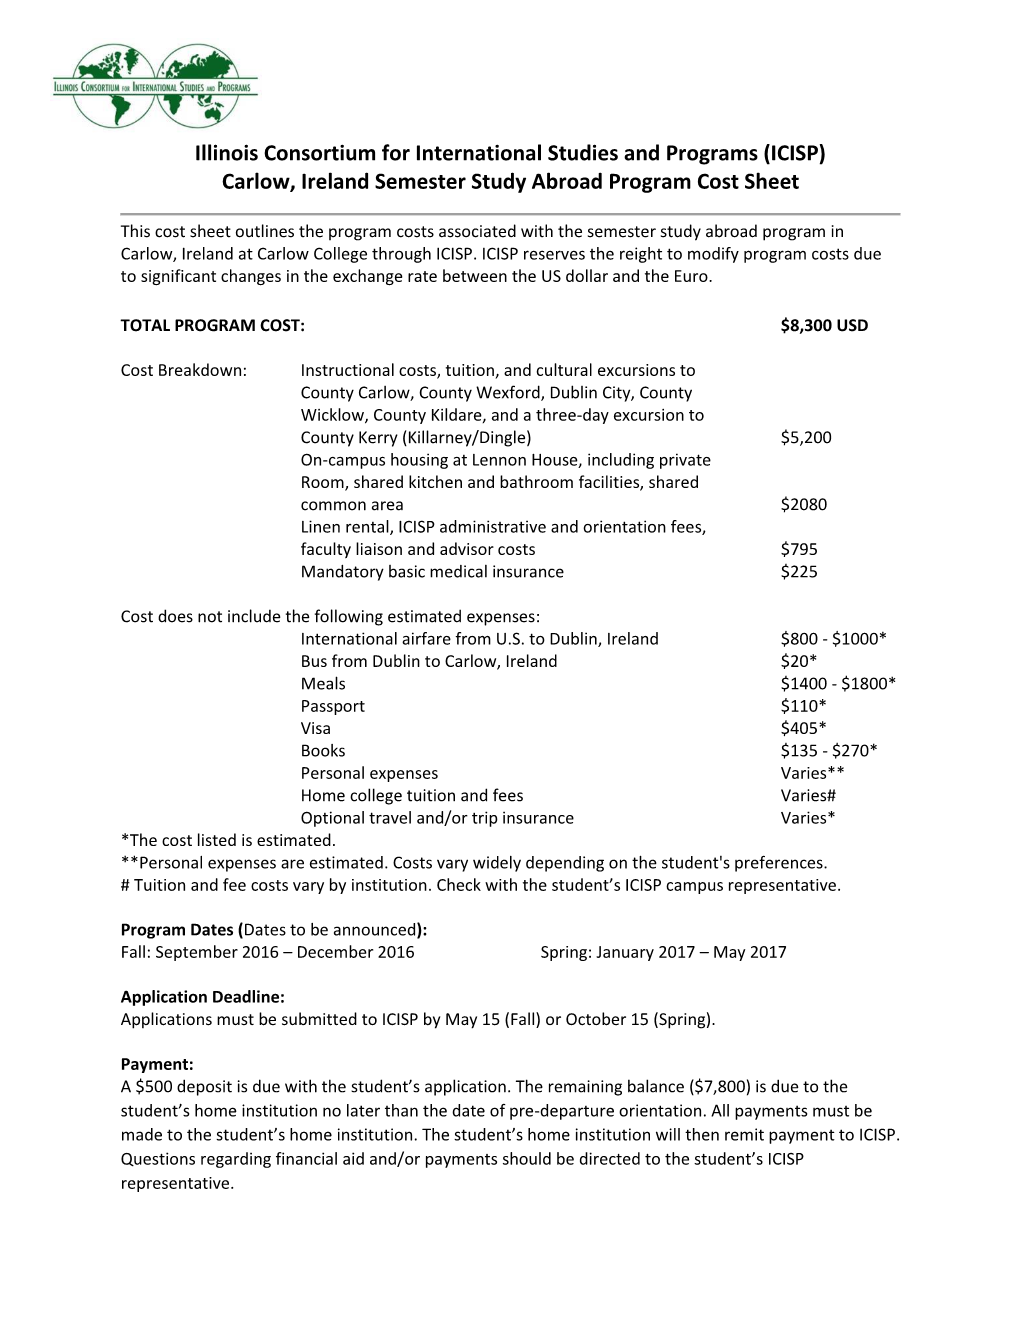 Illinois Consortium for International Studies and Programs (ICISP) Carlow, Ireland Semester Study Abroad Program Cost Sheet